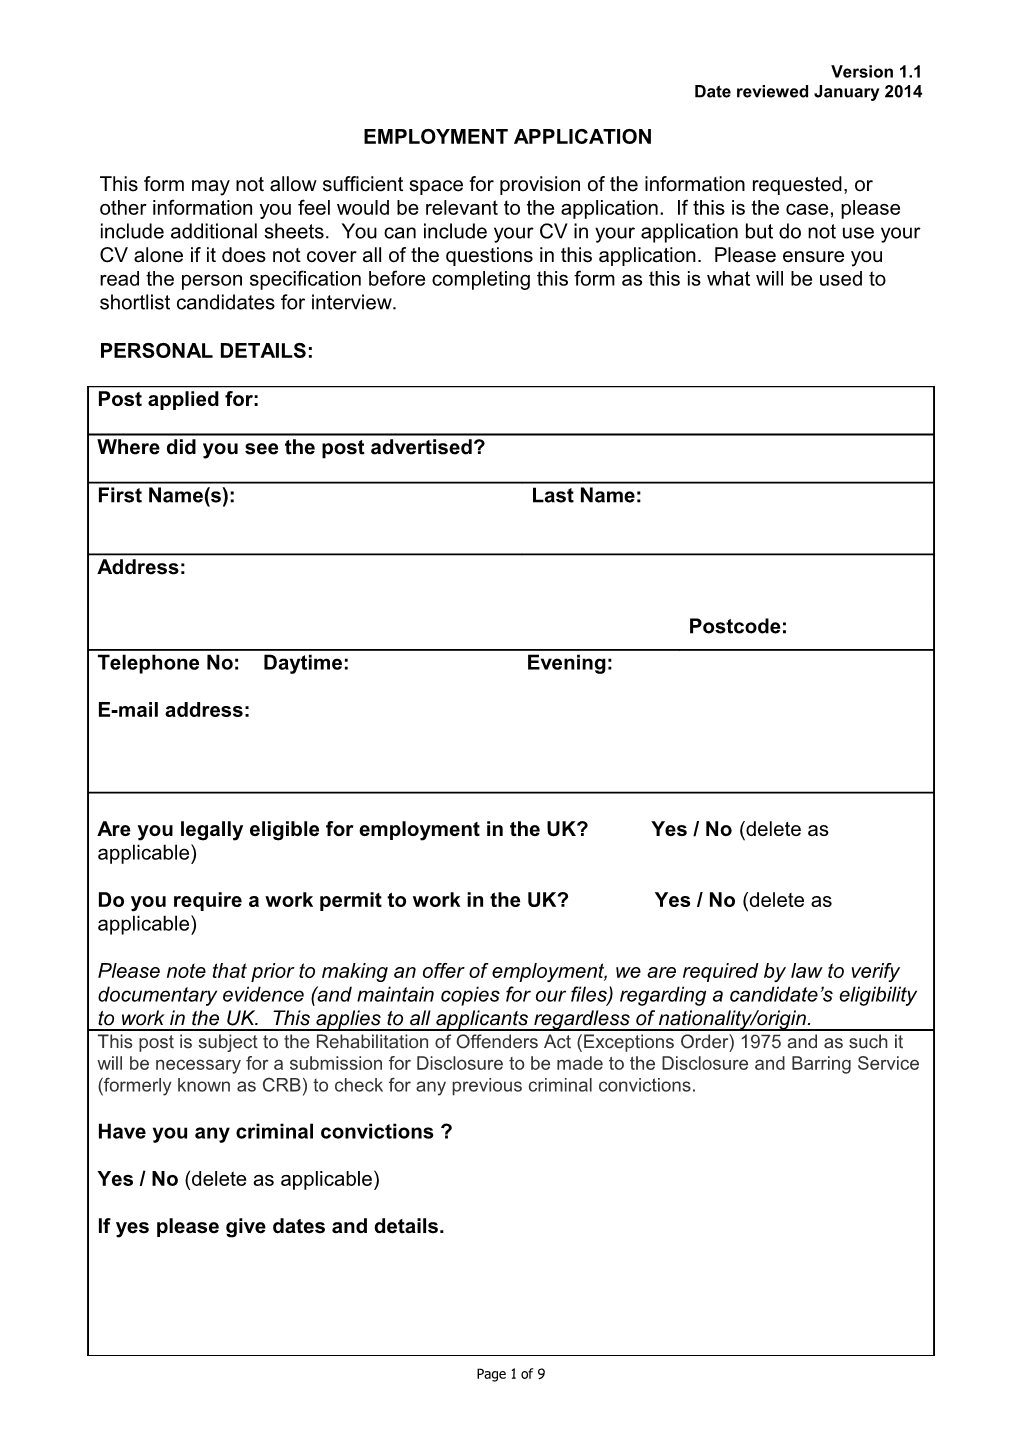 Employment Application s31